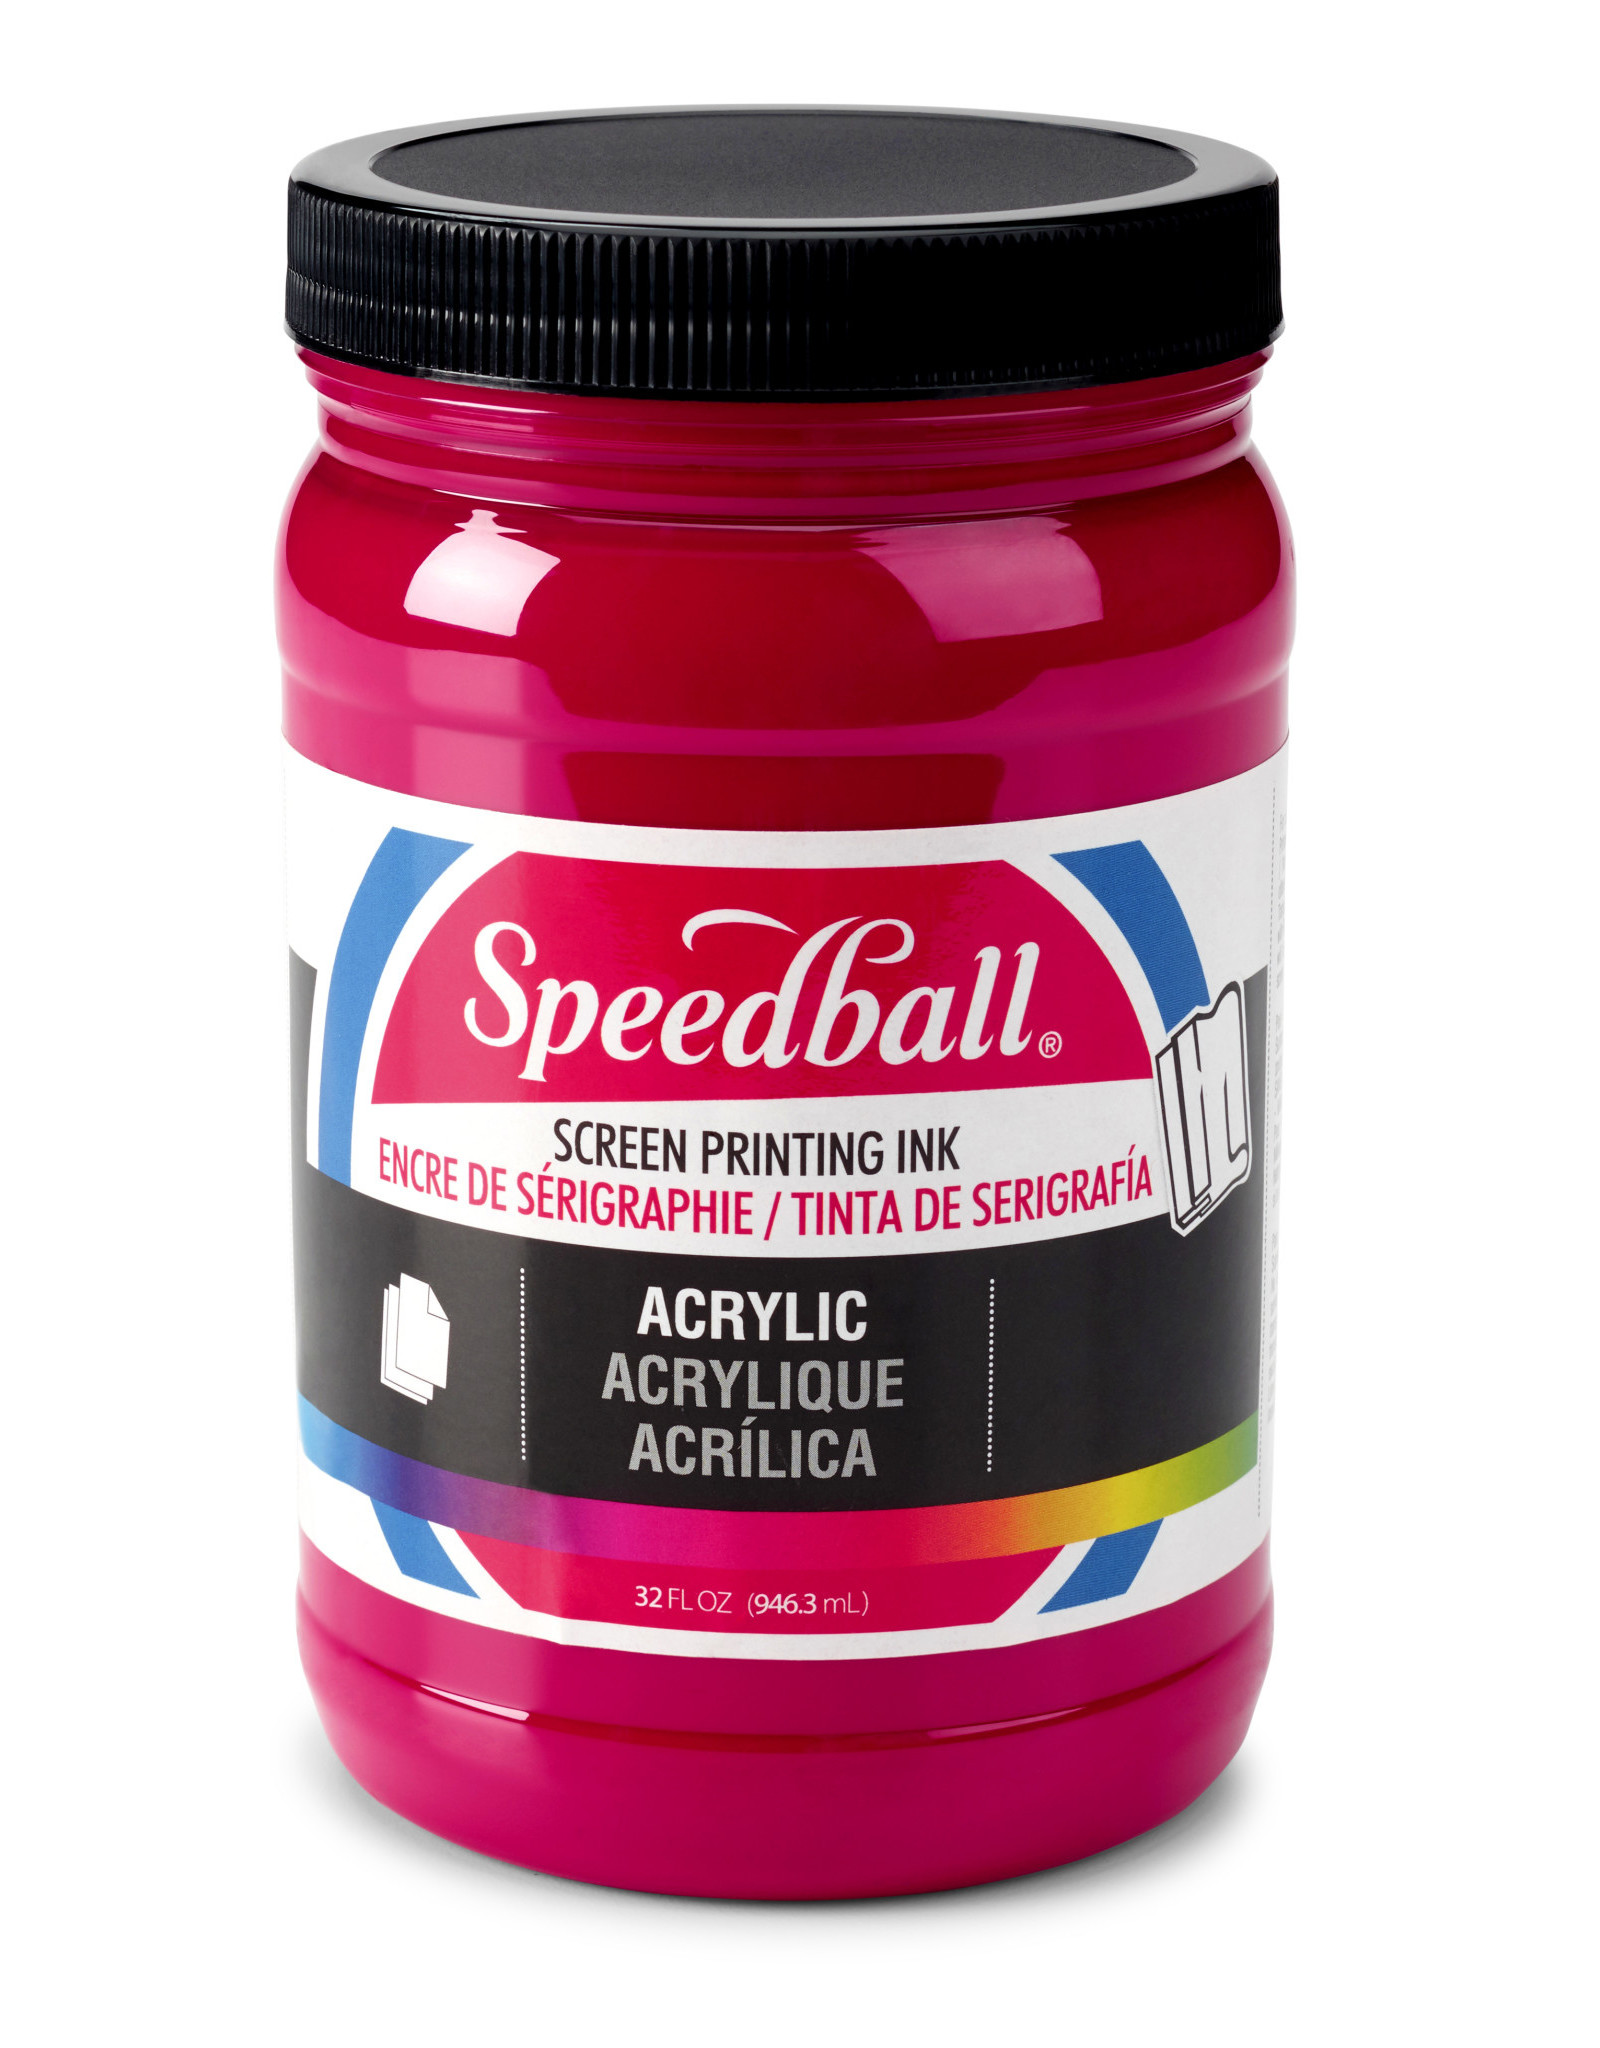 SPEEDBALL ART PRODUCTS Speedball Acrylic Screen Printing Ink, Process Magenta, 32oz